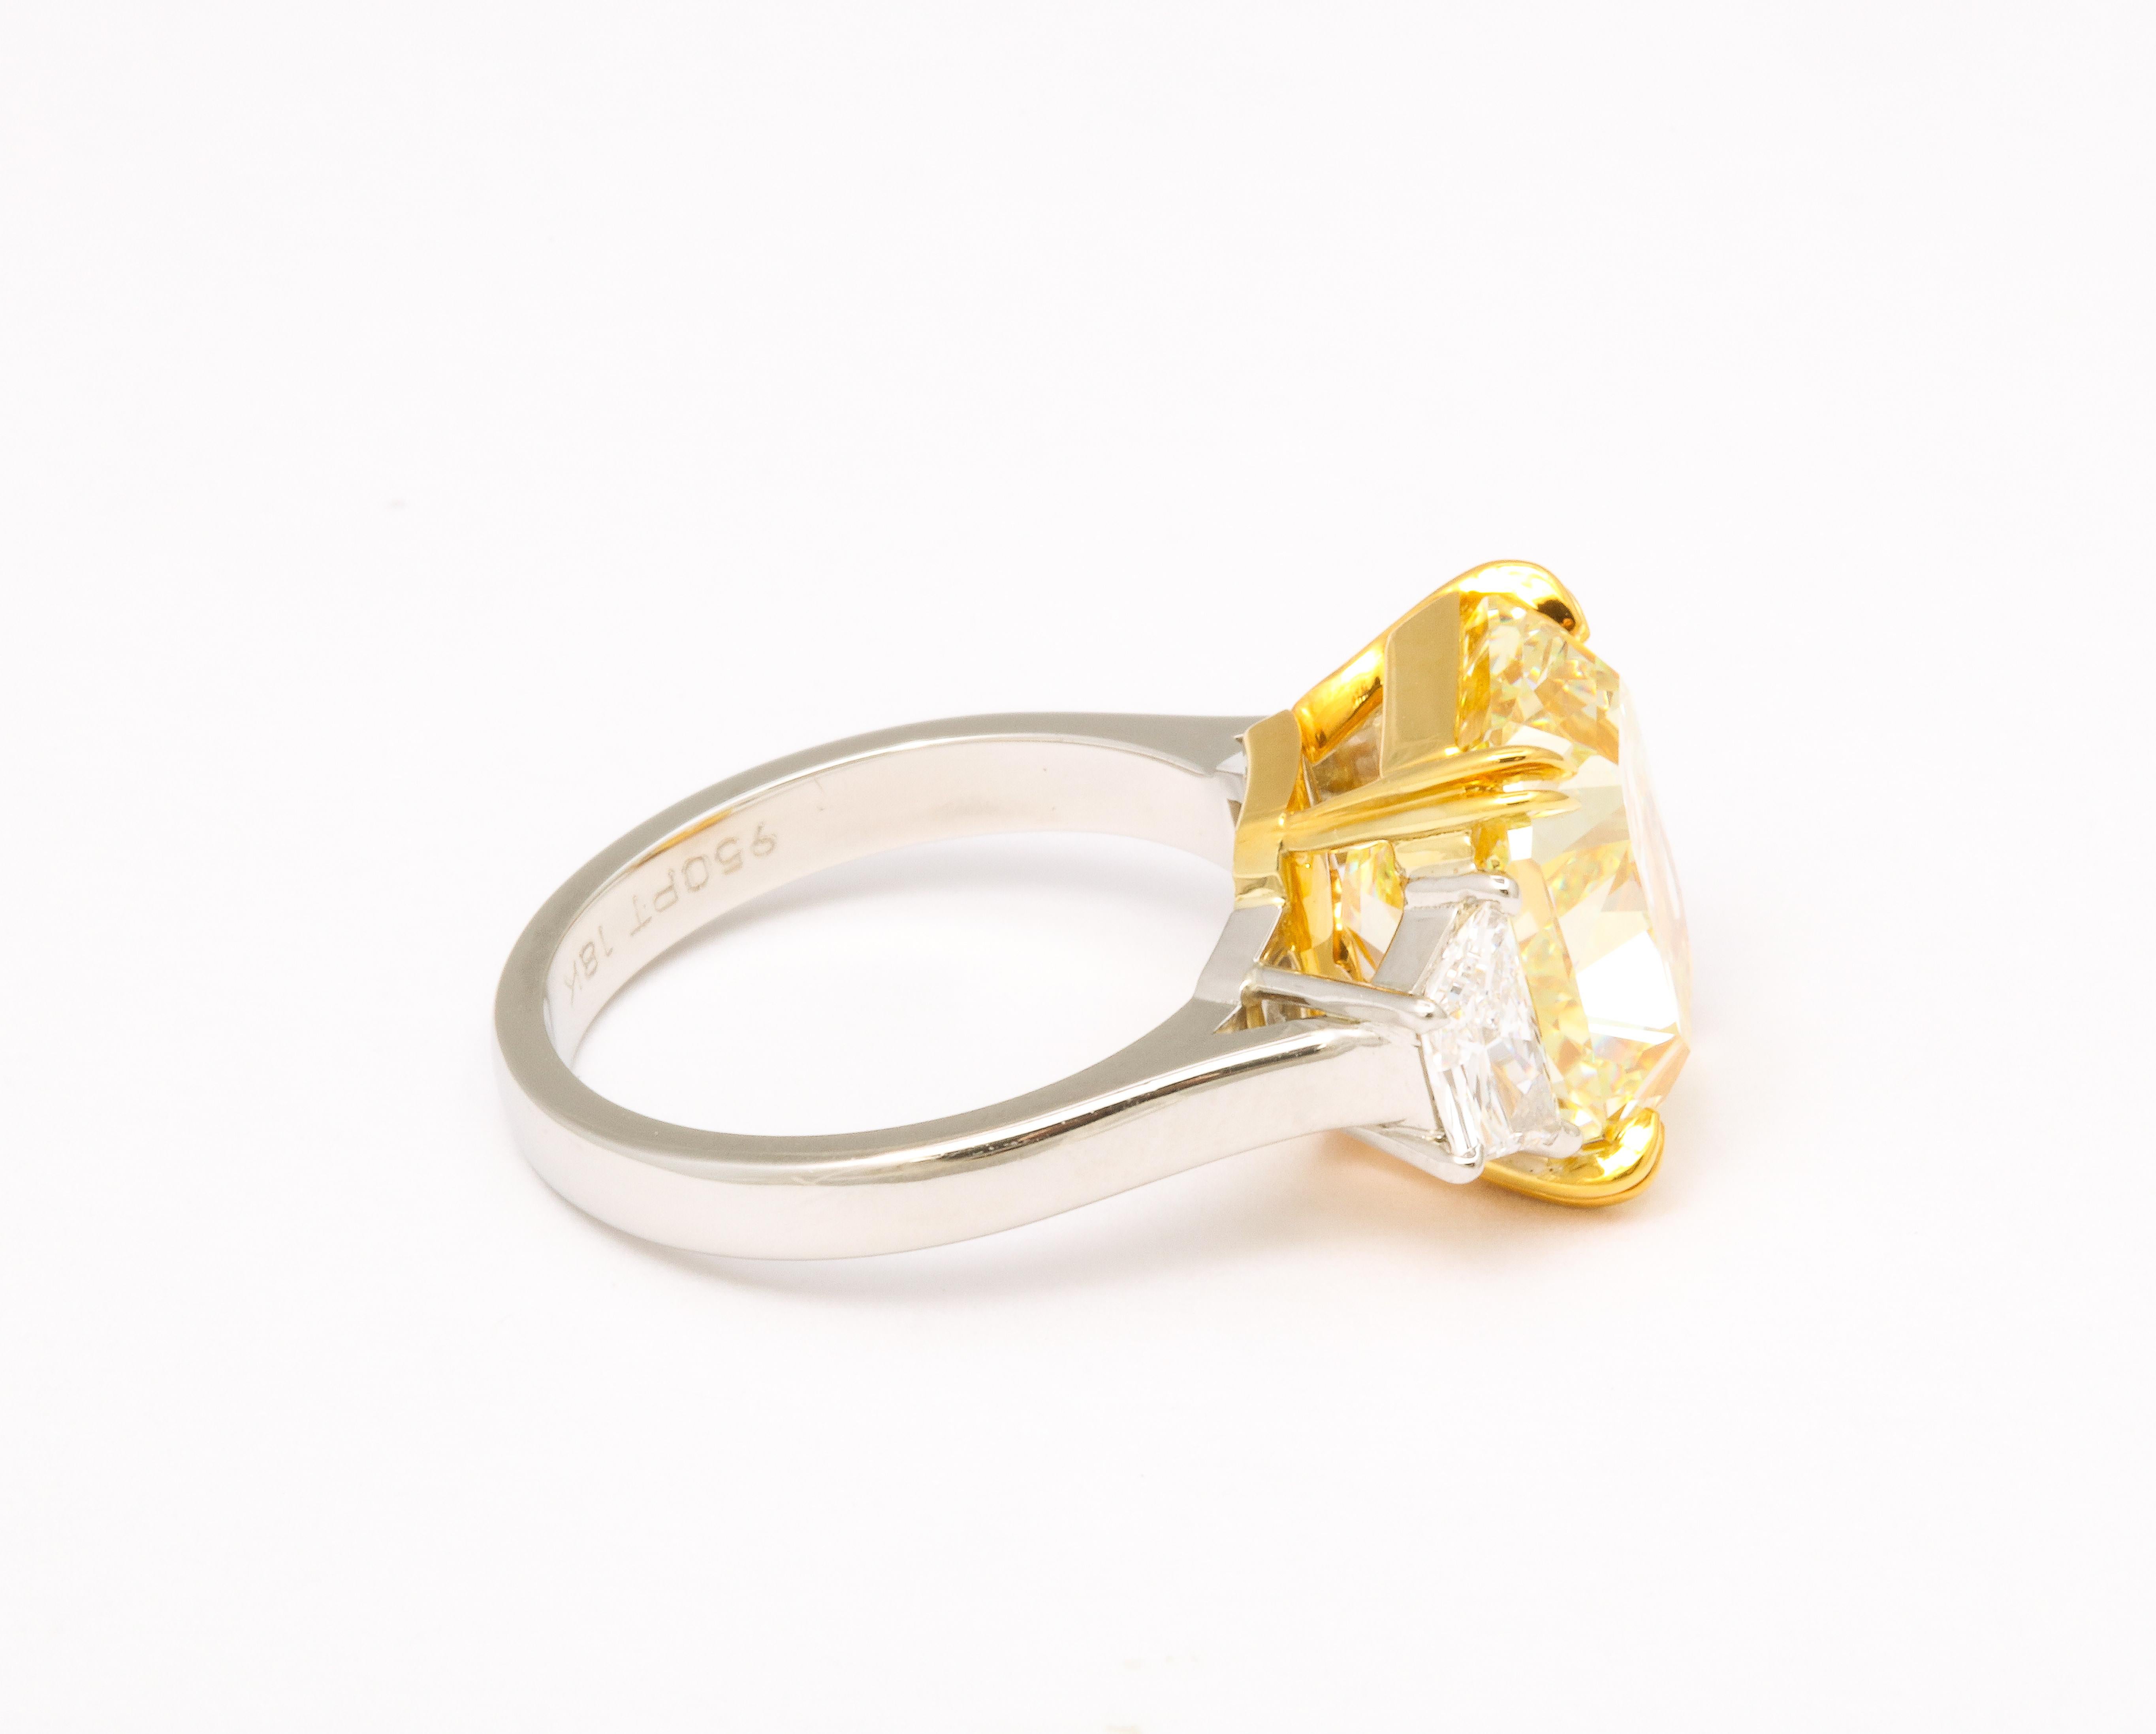 8 carat canary yellow diamond ring